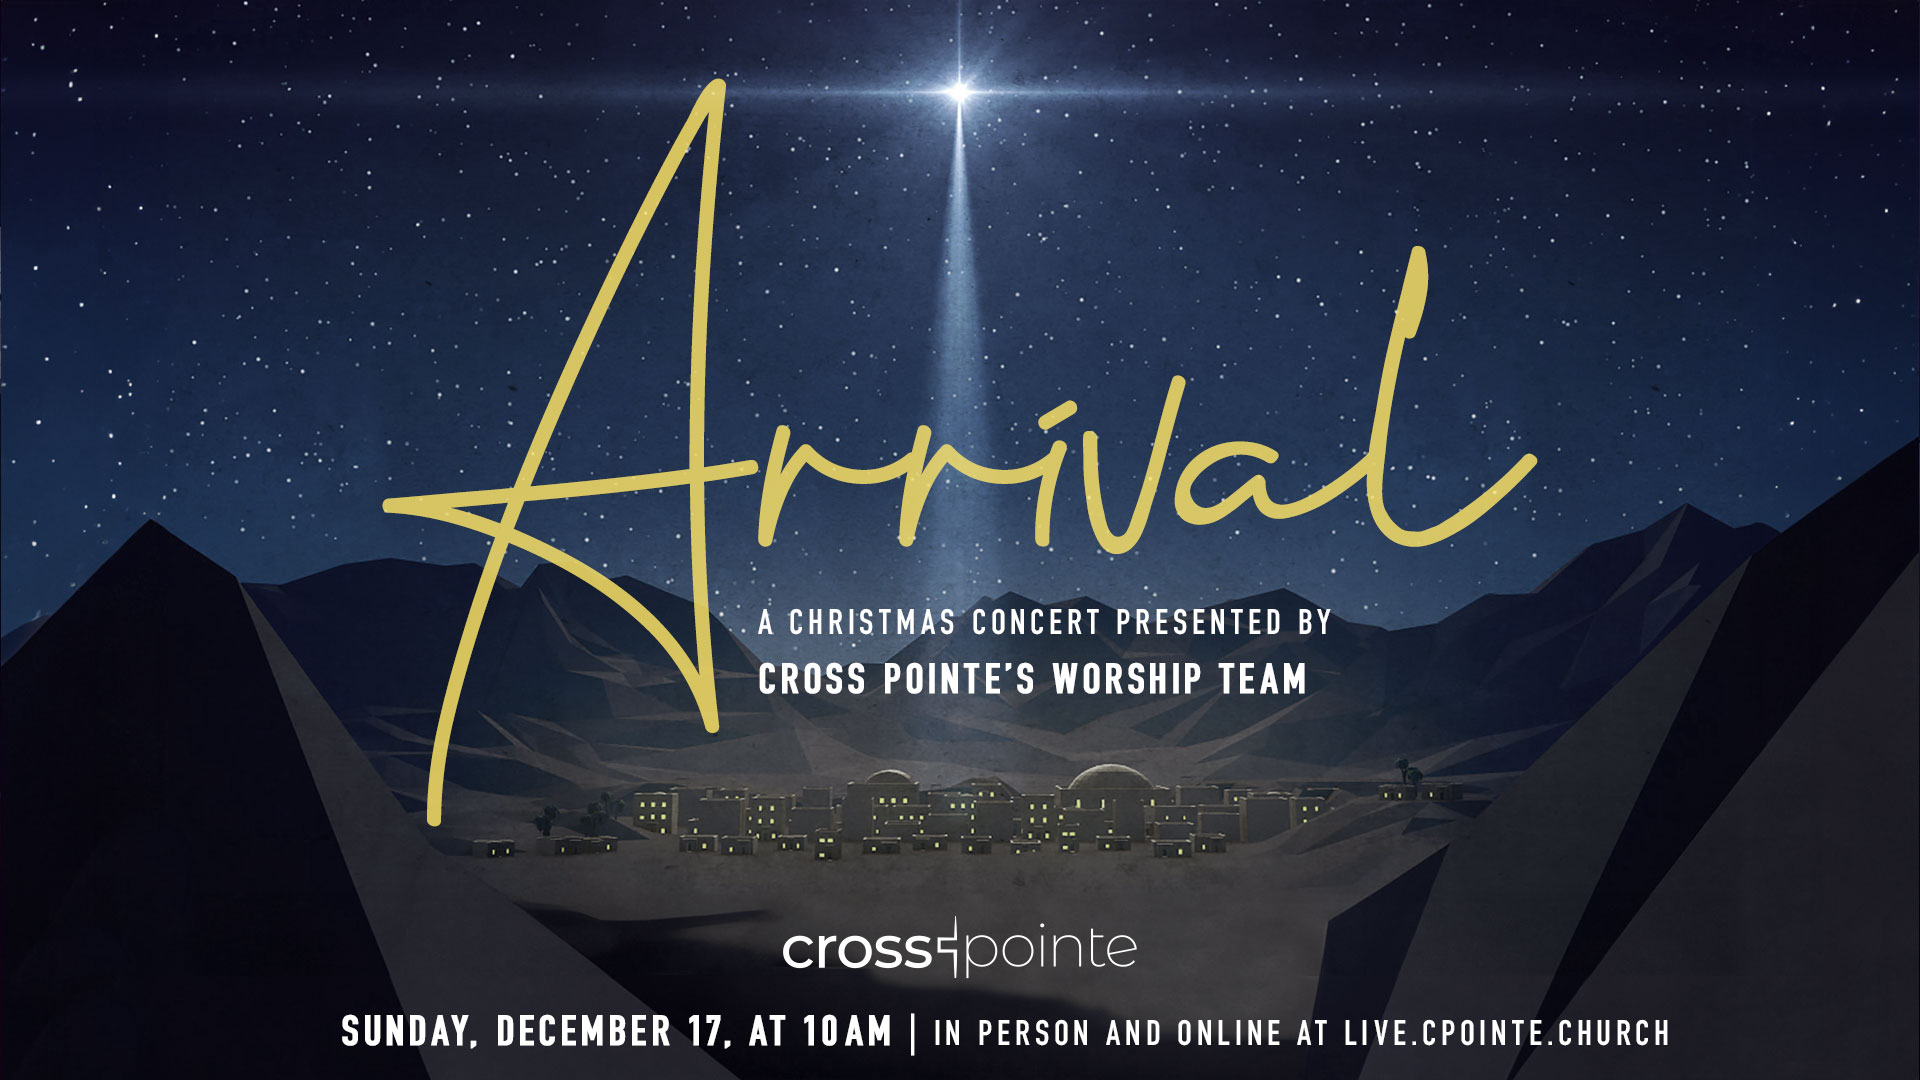 Arrival: A Christmas Concert